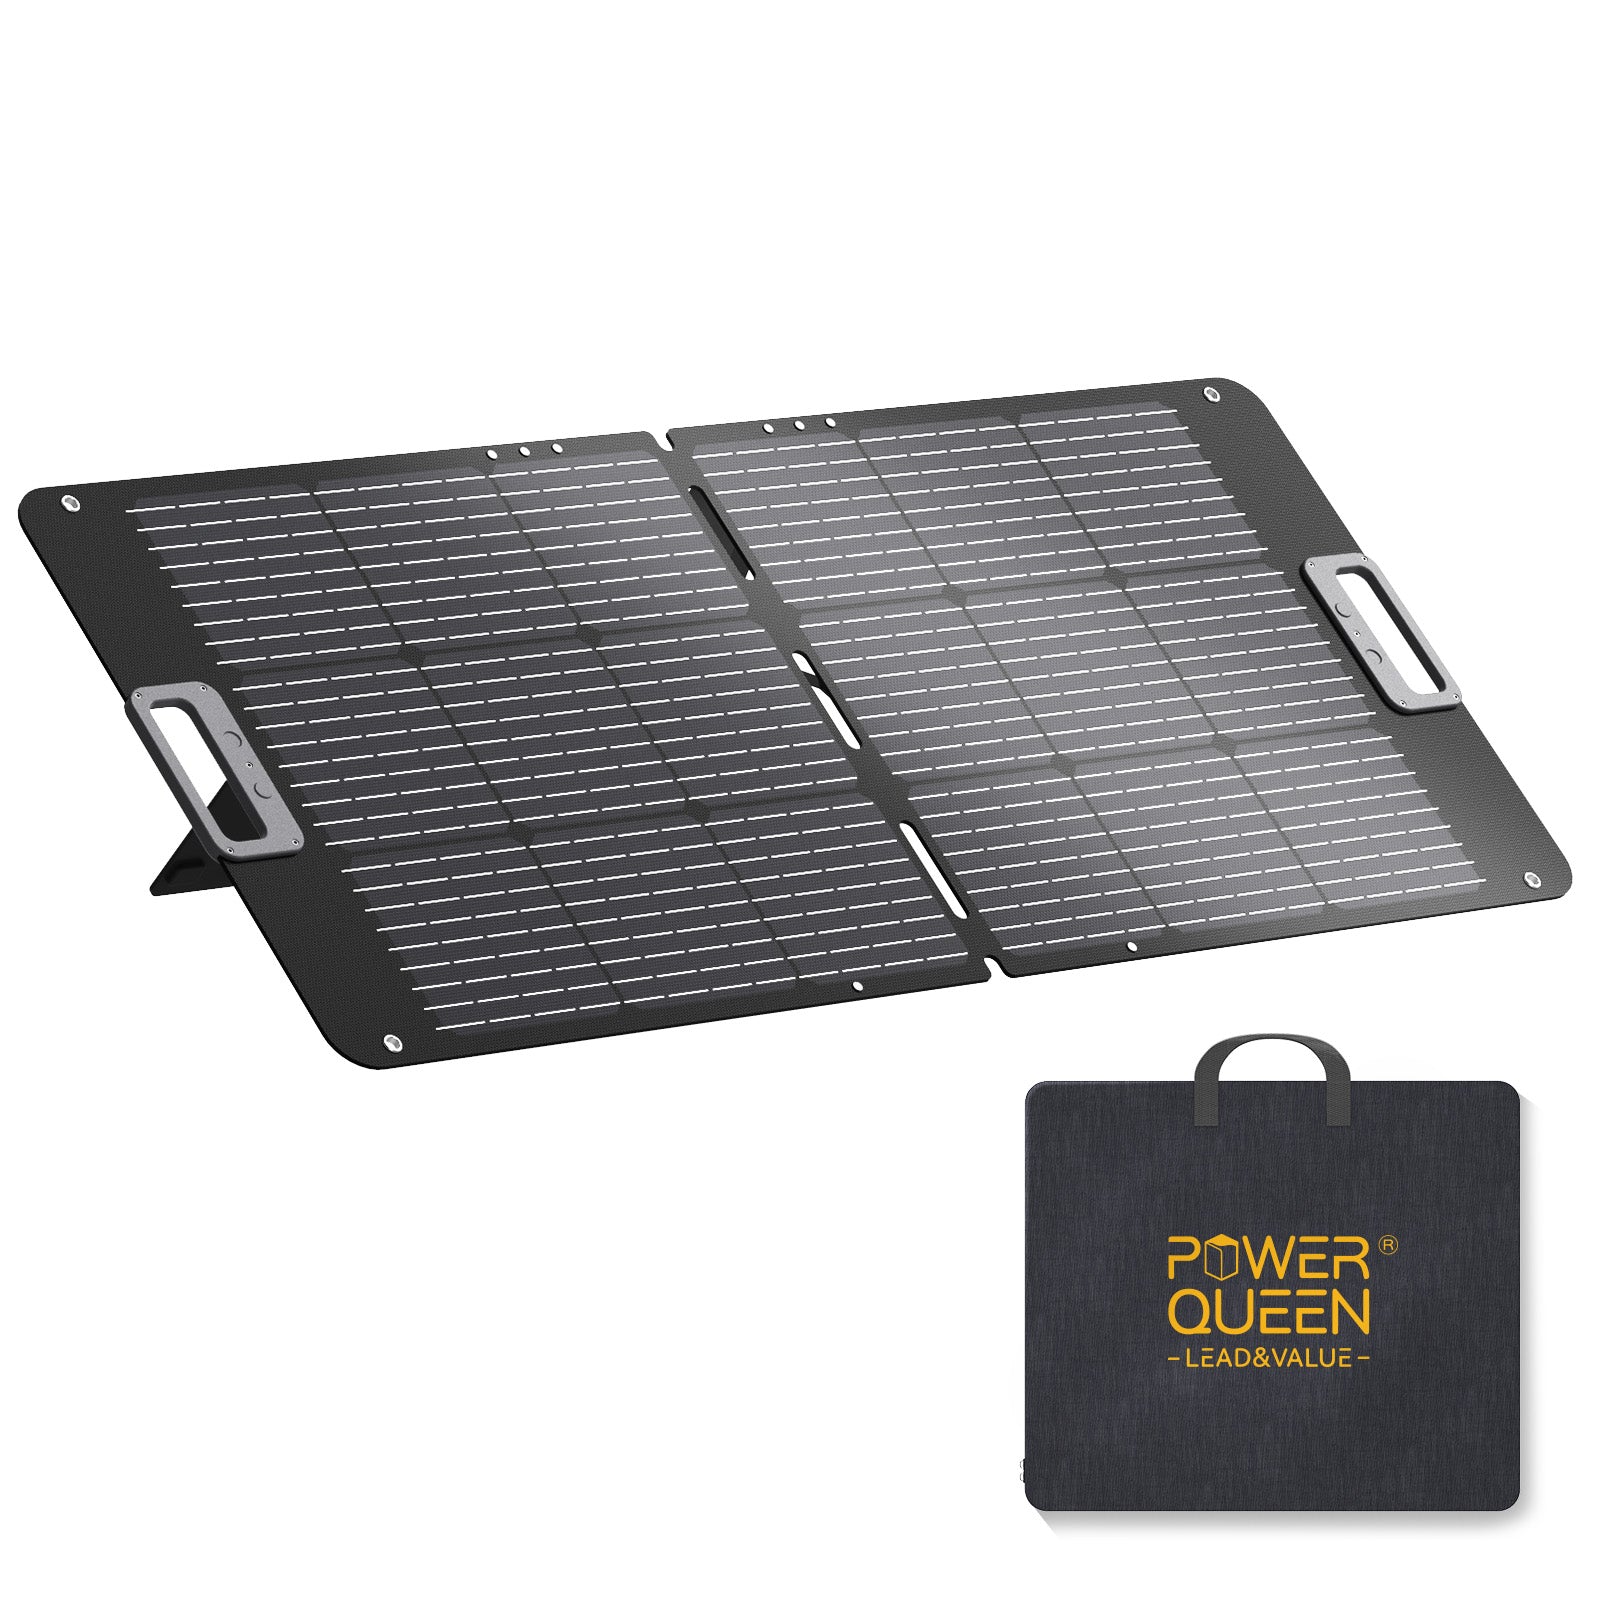 Power Queen 100W portable solar panel for gardens, balconies, RVs, camping